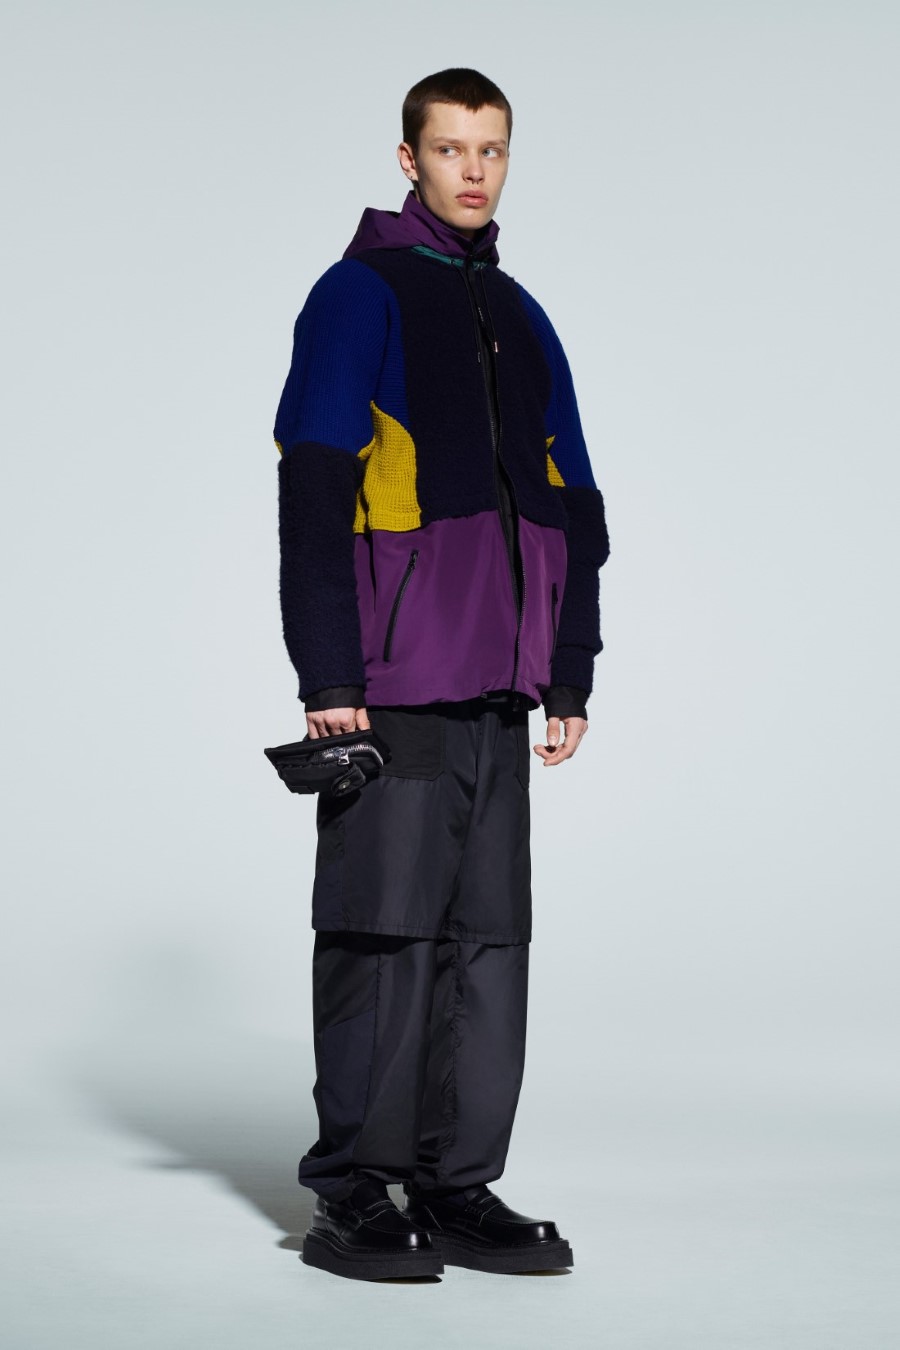 Sacai Men’s Fall Winter 2021 - Tokyo Fashion Week